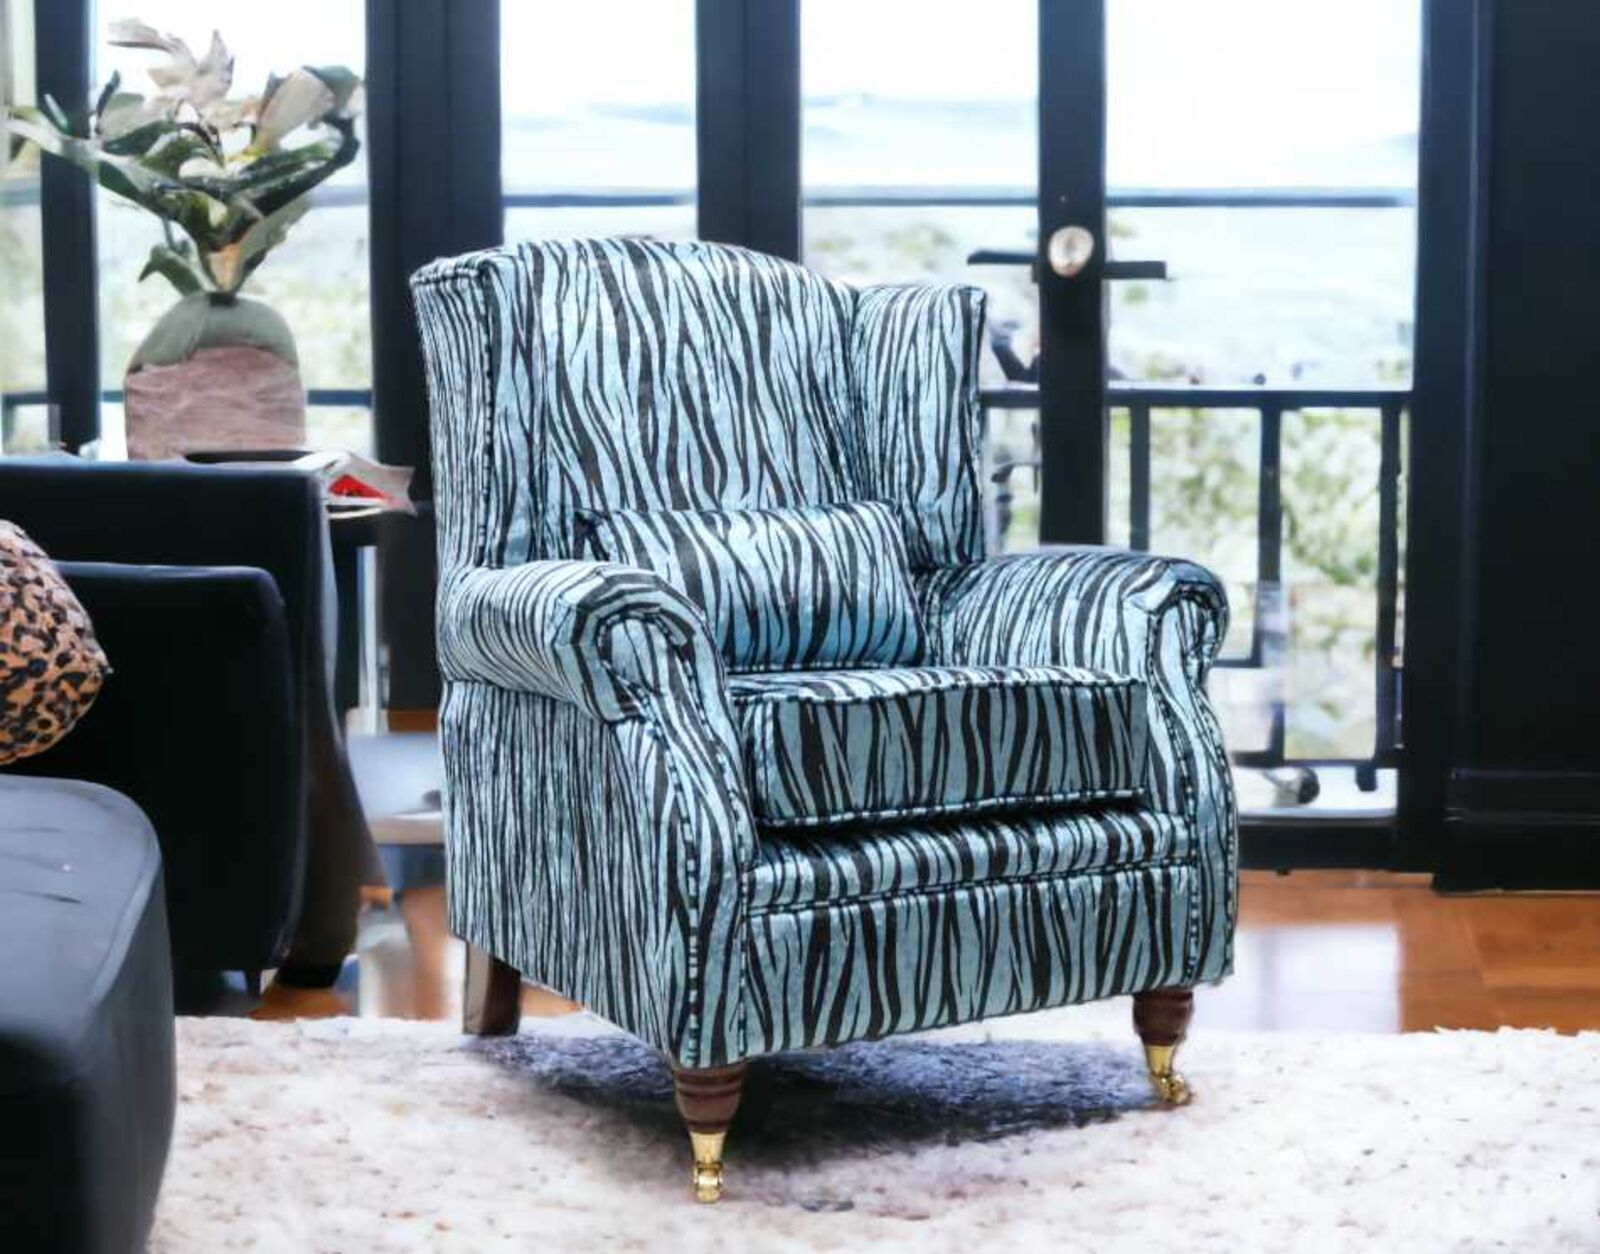 Product photograph of Wing Chair Fireside High Back Armchair Zebra Aqua Animal Print Fabric from Designer Sofas 4U